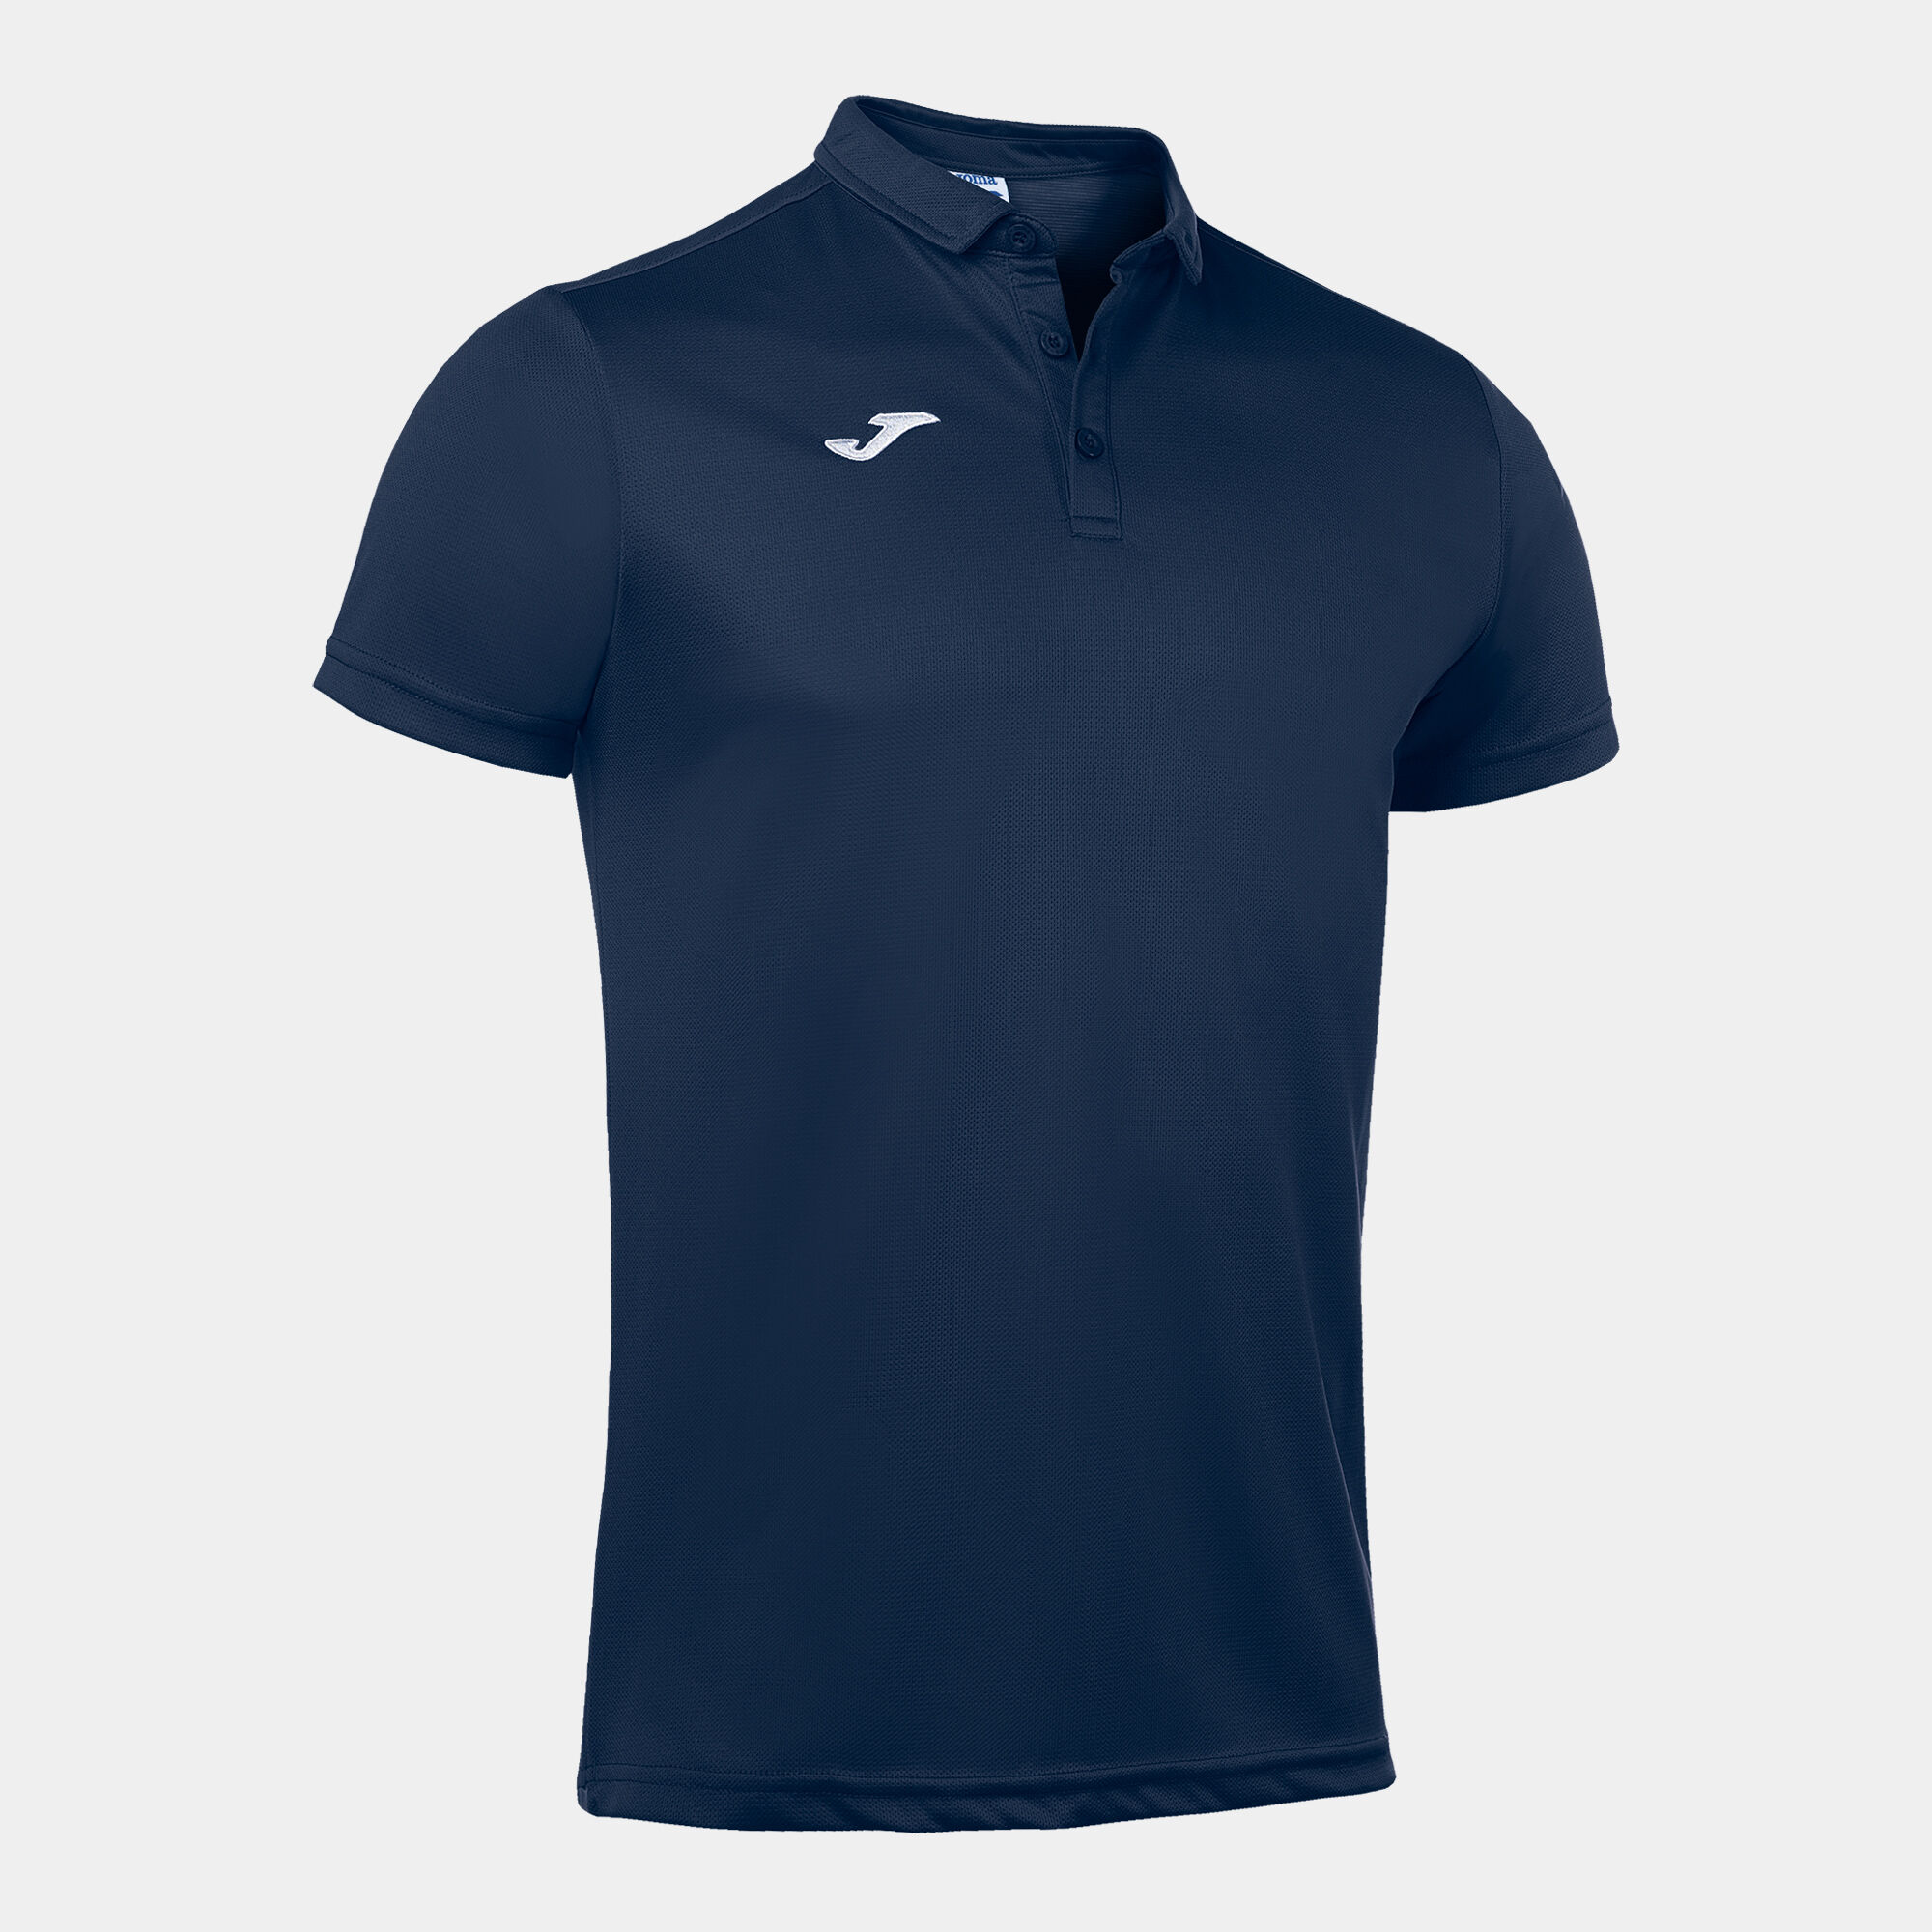 Polo shirt short-sleeve man Hobby navy blue